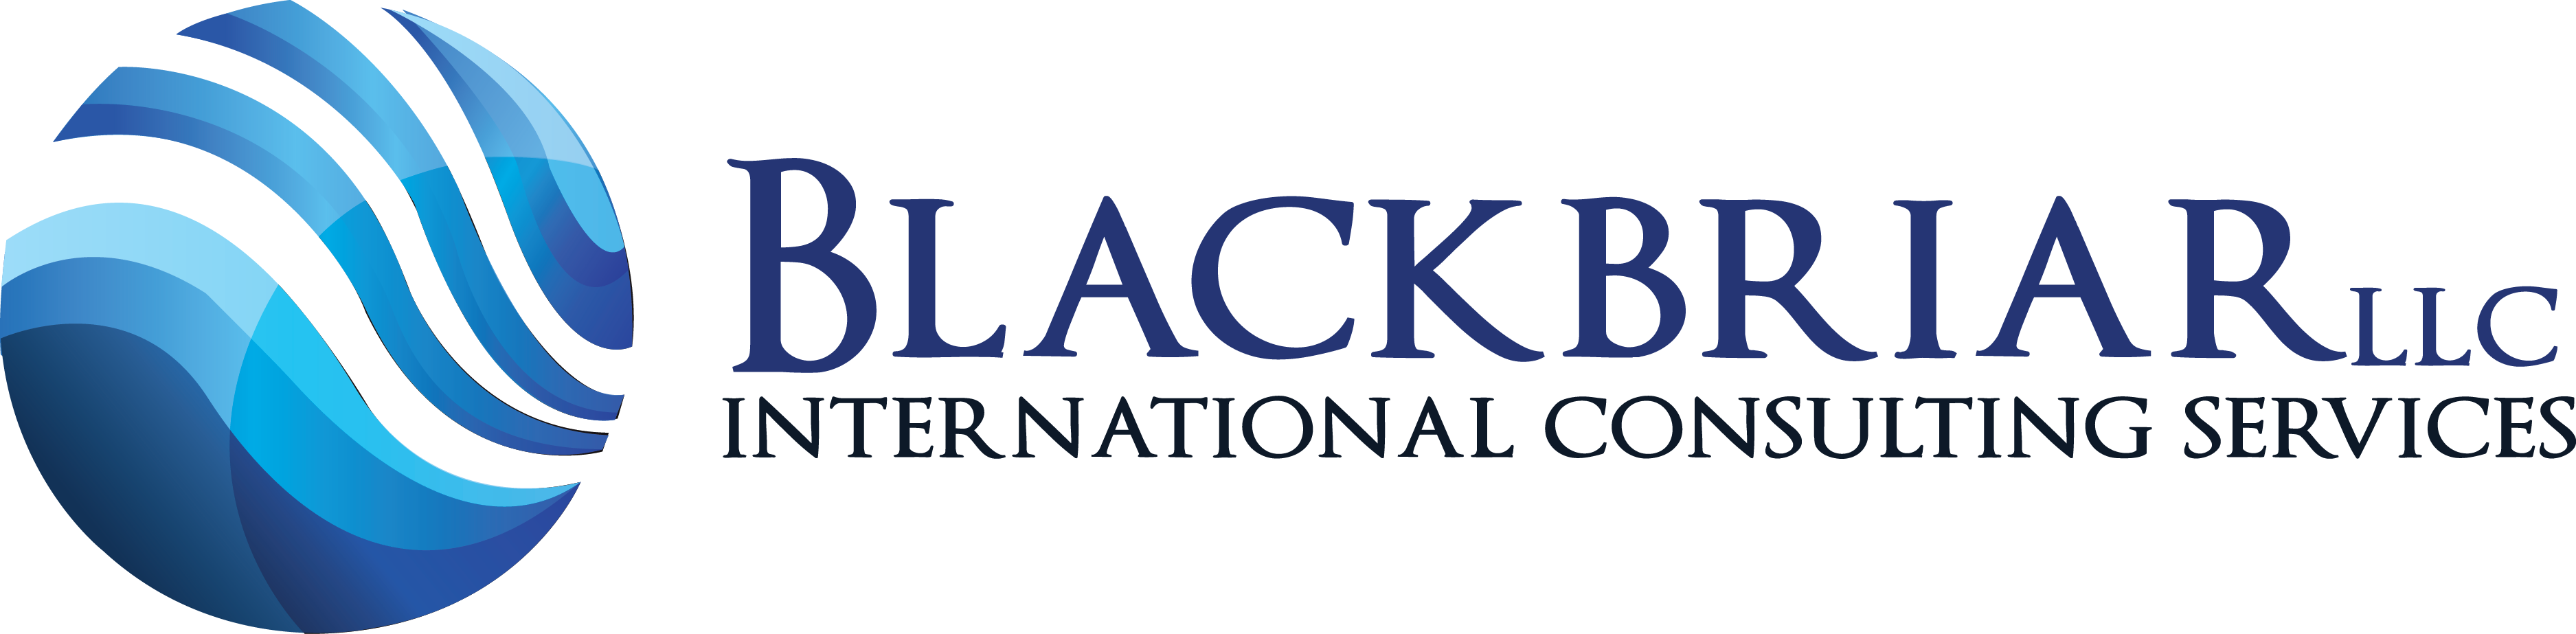 Blackbriar-LLC International Consulting